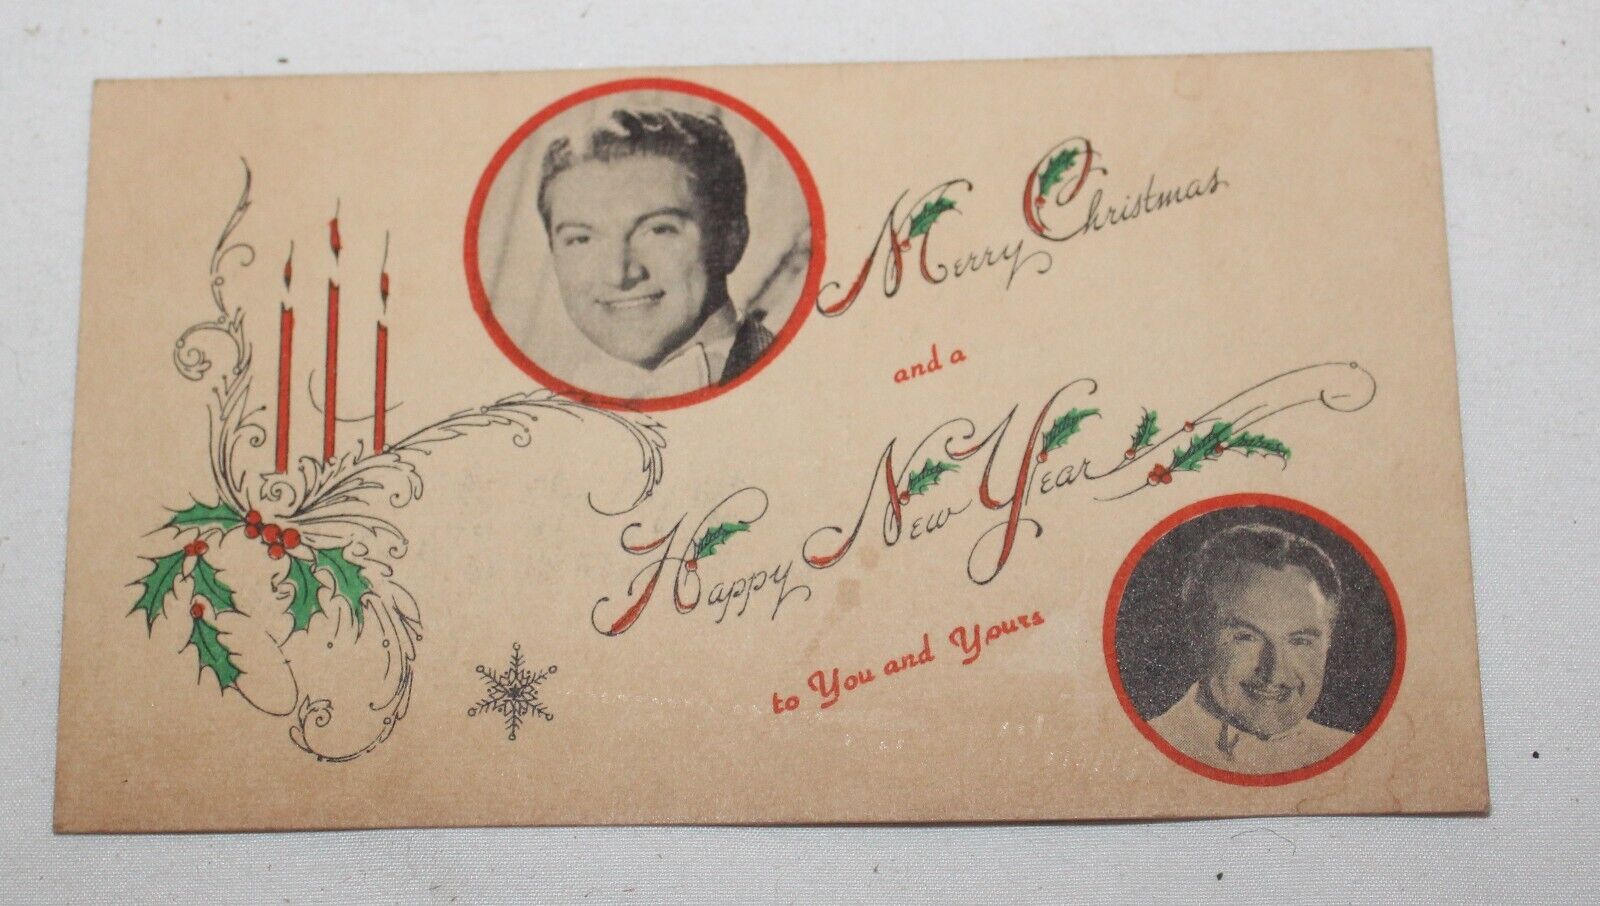 VTG Liberace & George Liberace Photo Merry Christmas New Years Postcard Fan